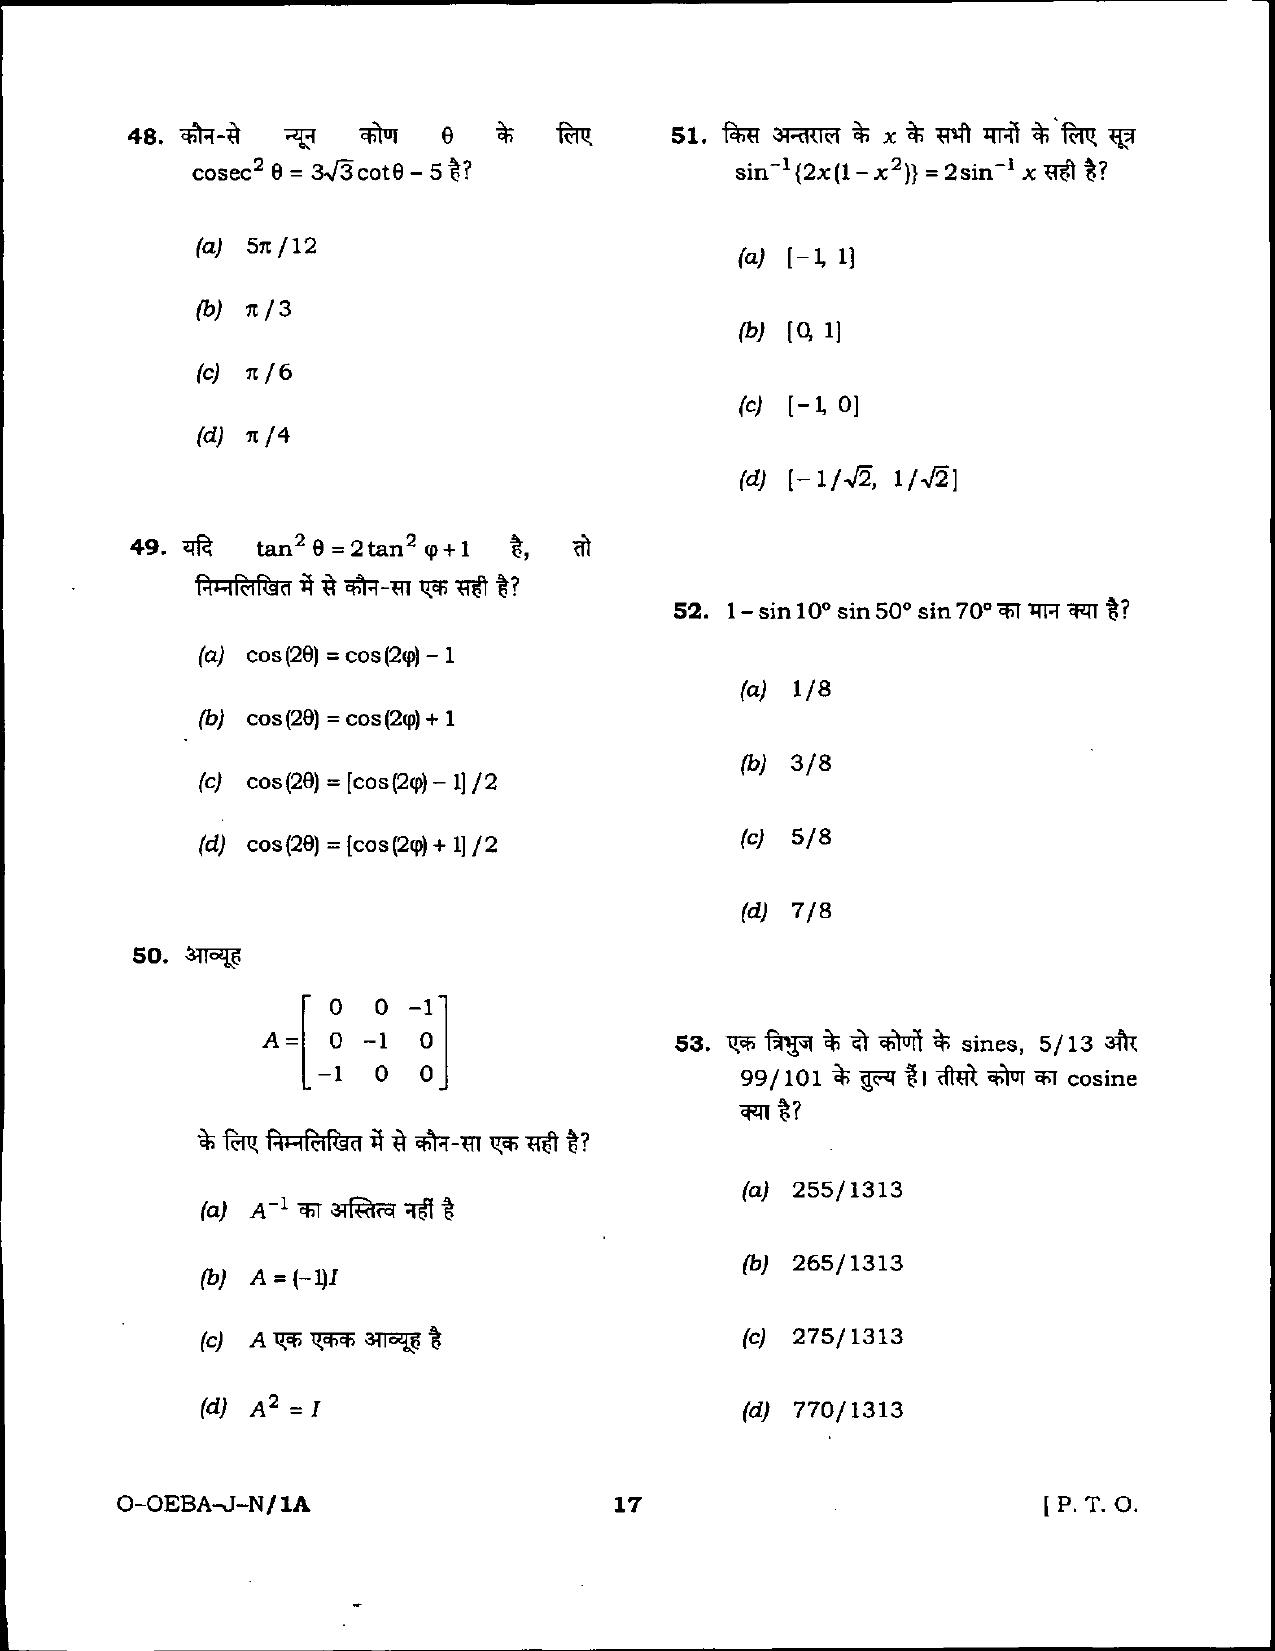 Odisha Junior Clerk Question Paper - General Mathematics - Page 17